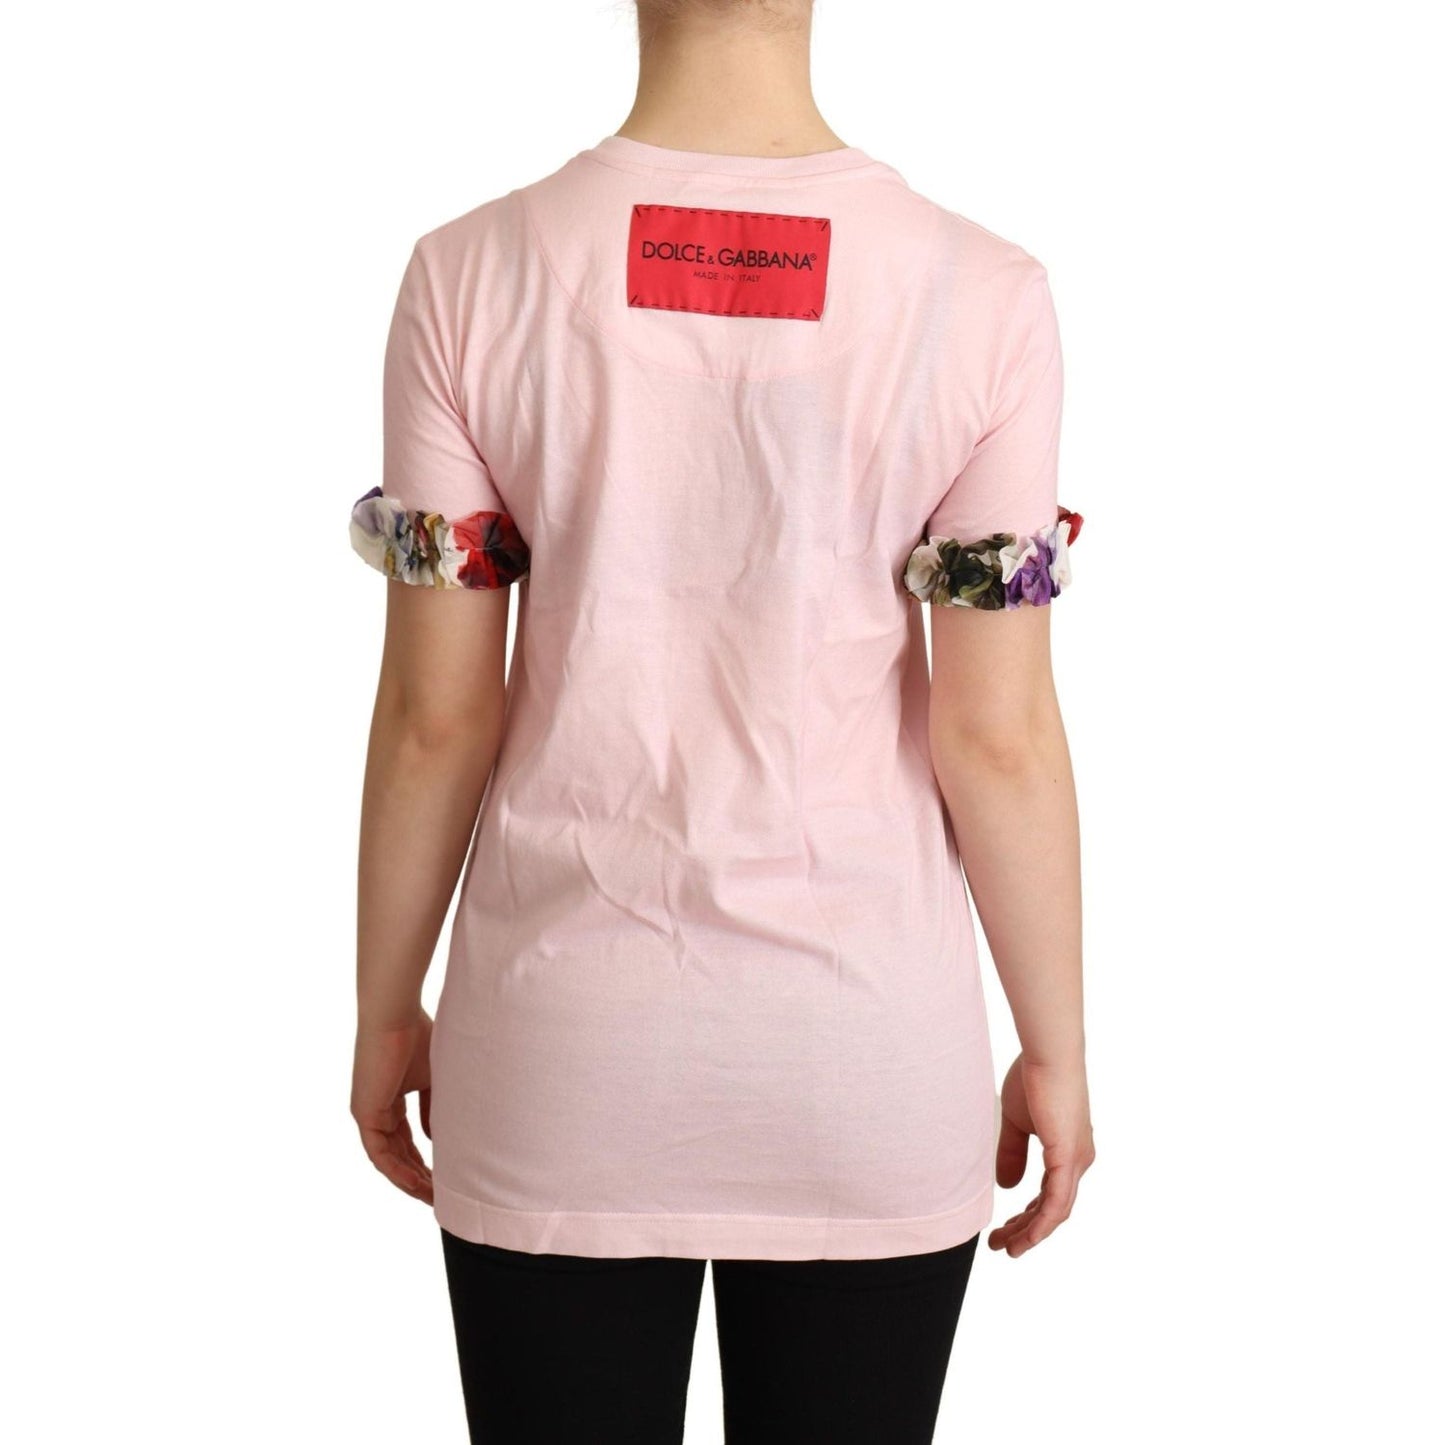 Dolce & Gabbana Elegant Floral Rose Applique T-Shirt WOMAN T-SHIRTS pink-cotton-floral-roses-crewneck-t-shirt IMG_9786-scaled-f8a2f3ed-a3e.jpg